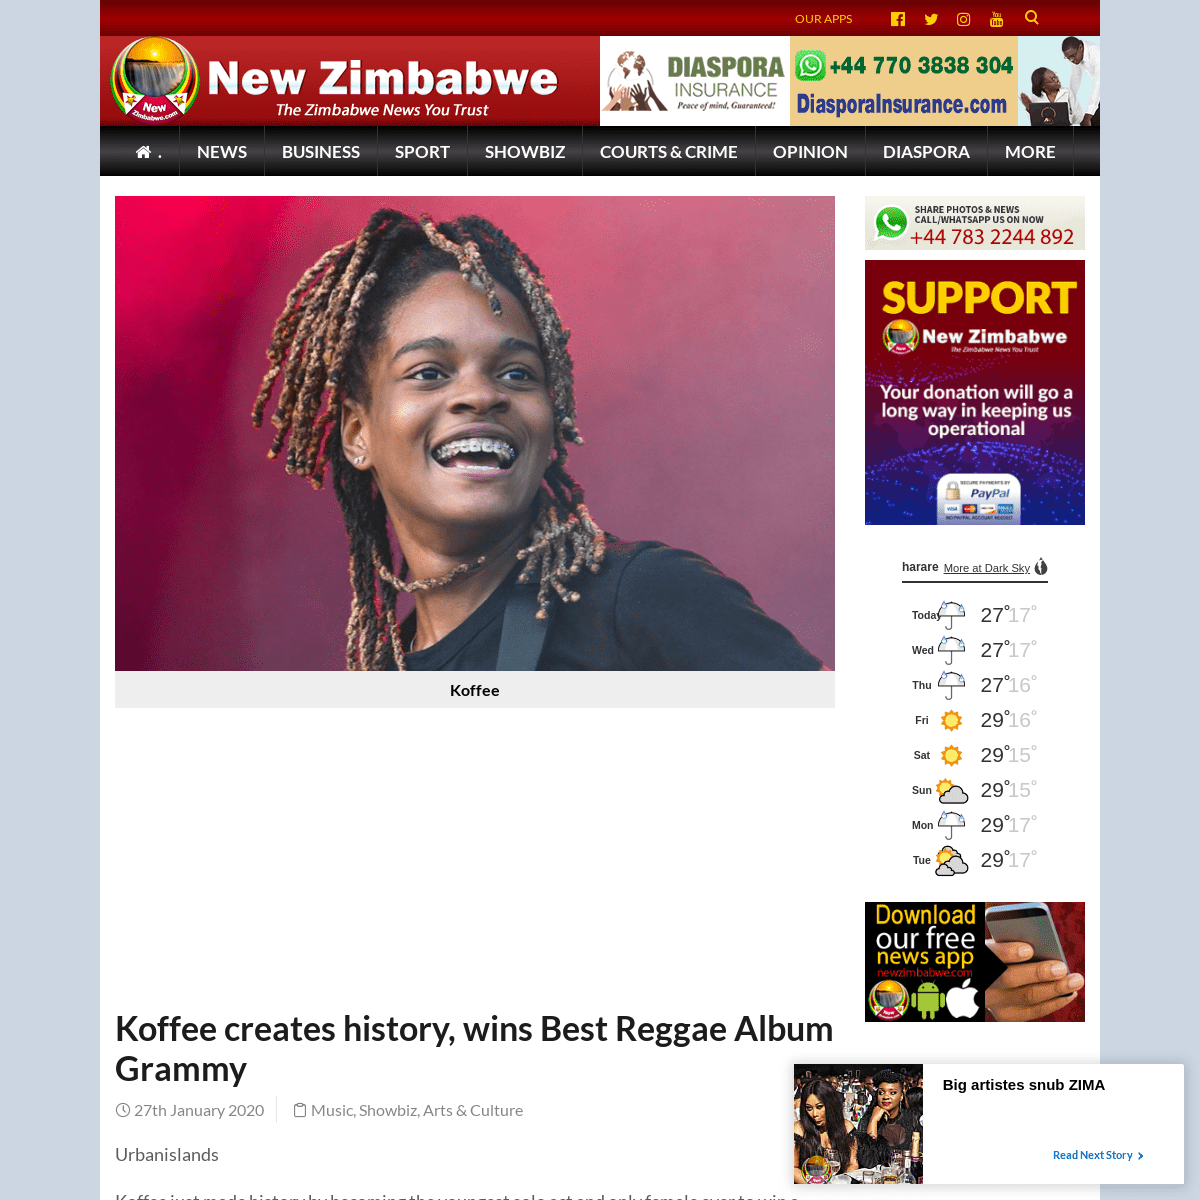 A complete backup of www.newzimbabwe.com/koffee-creates-history-wins-best-reggae-album-grammy/